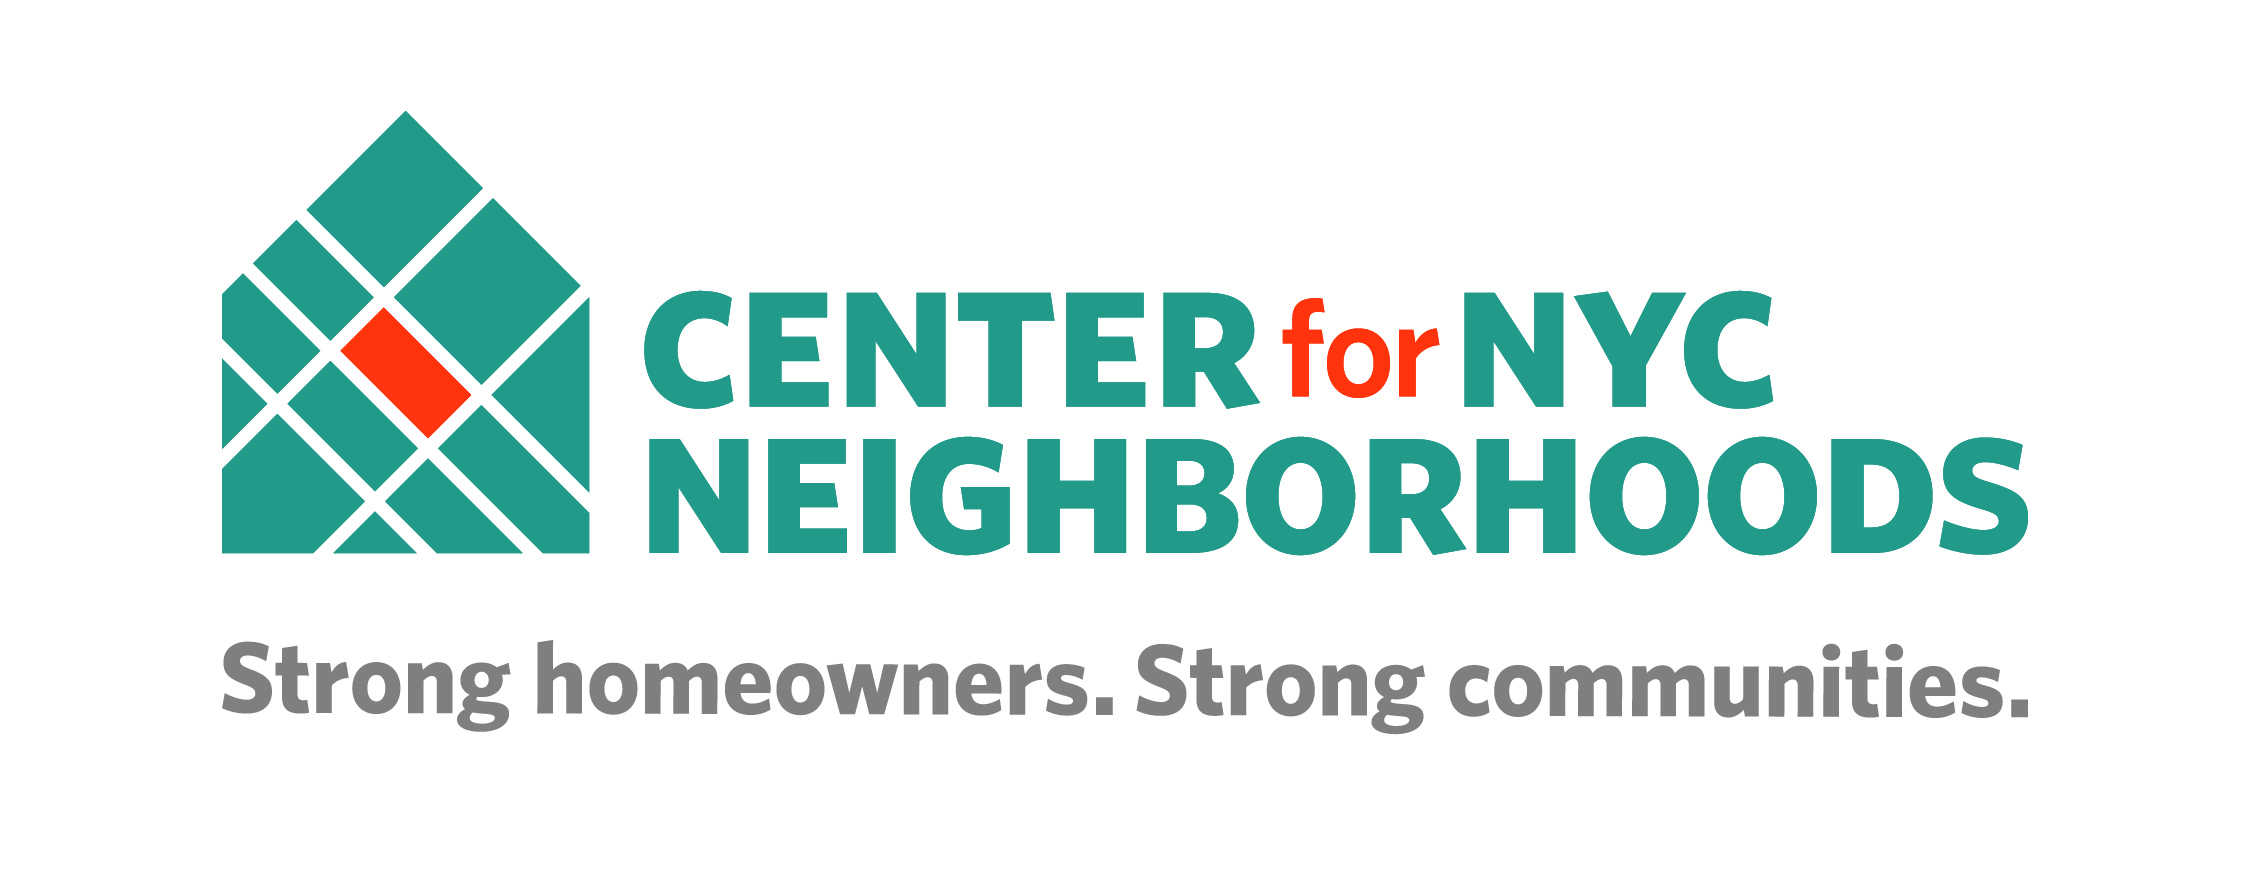 Center for NYC Neighborhoods